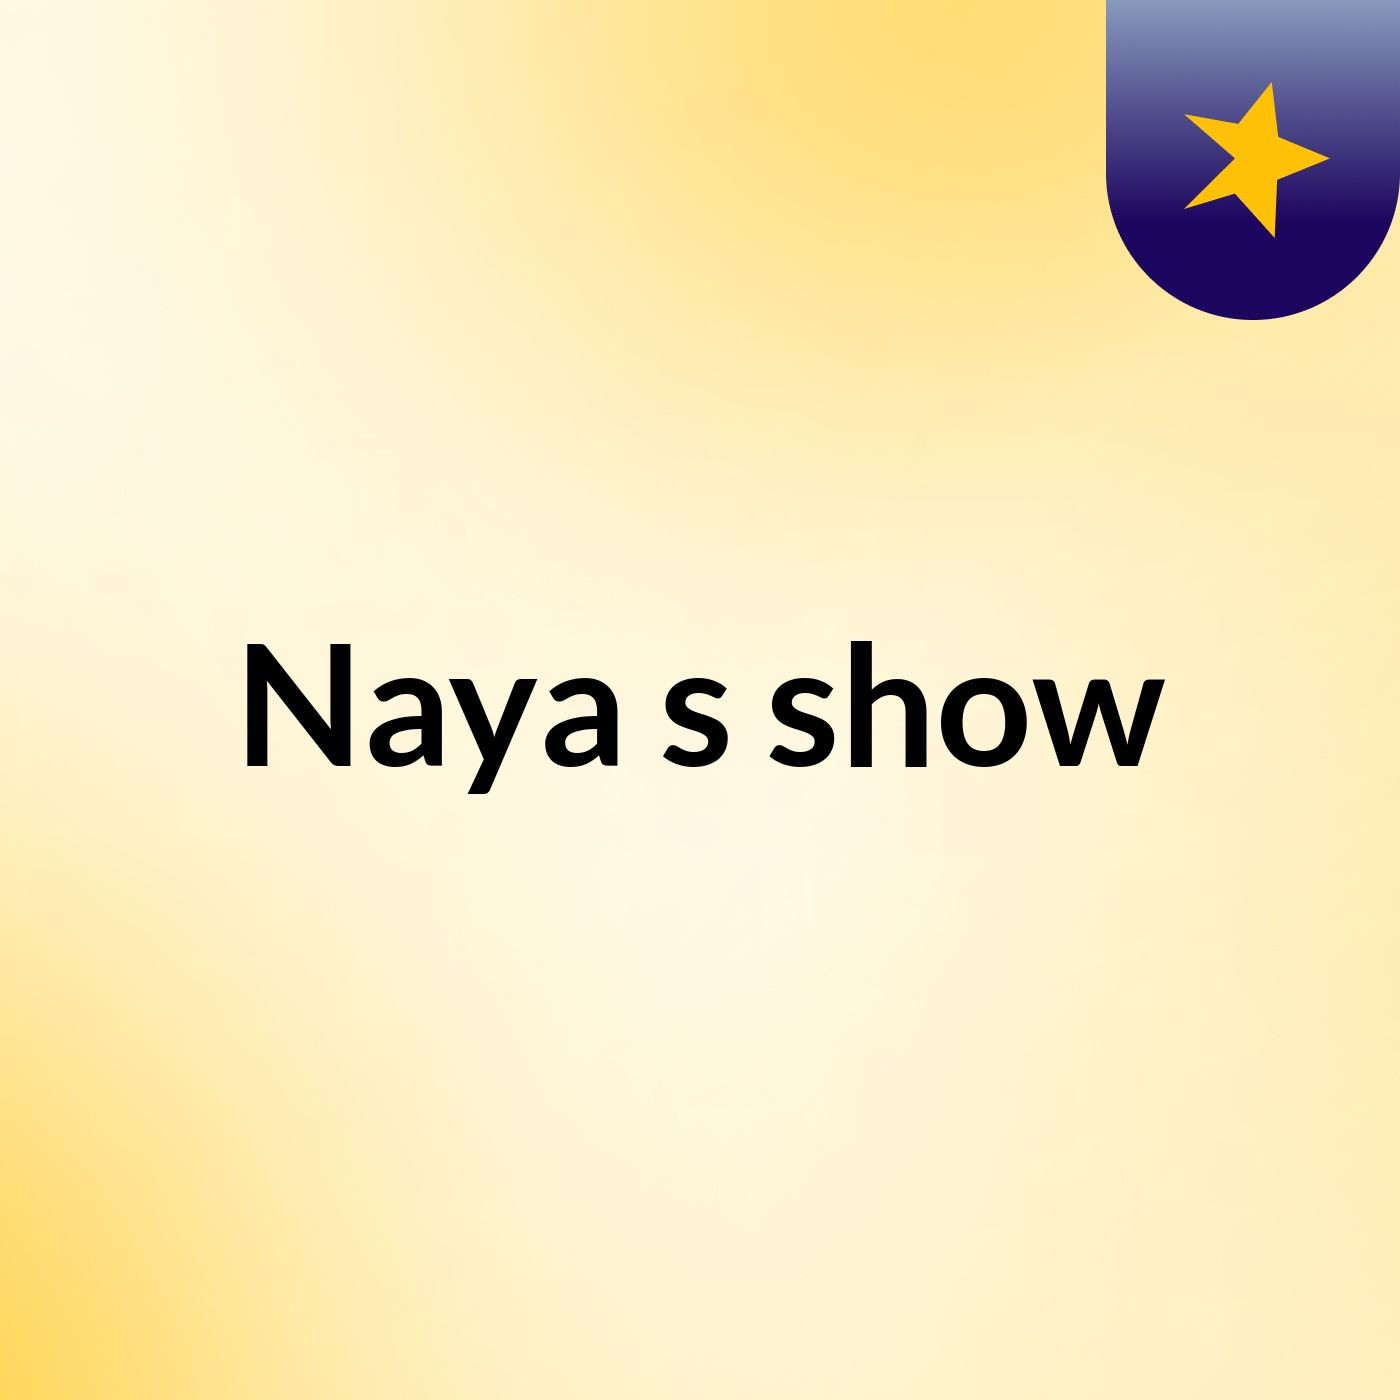 Naya's show